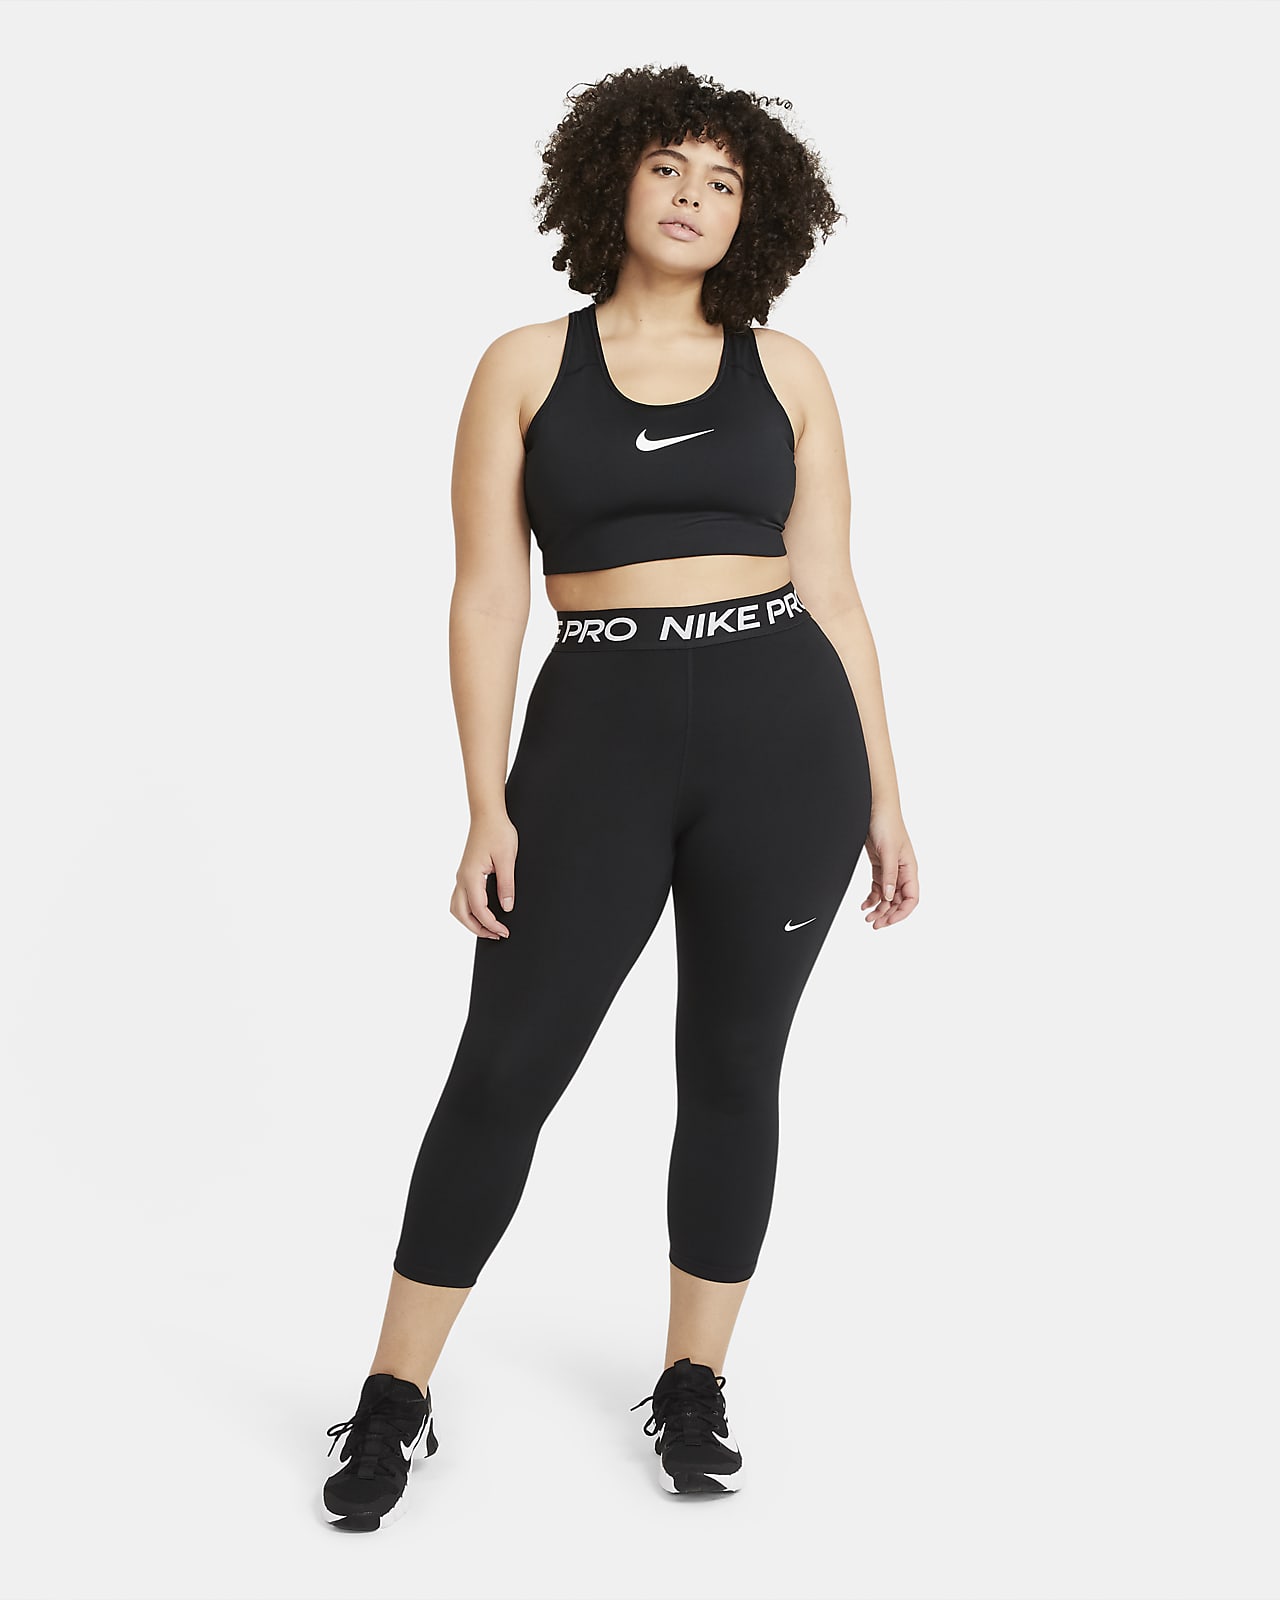 Seguir doce Tradicional Nike Pro Women's Mid-Rise Crop Leggings (Plus Size). Nike ZA